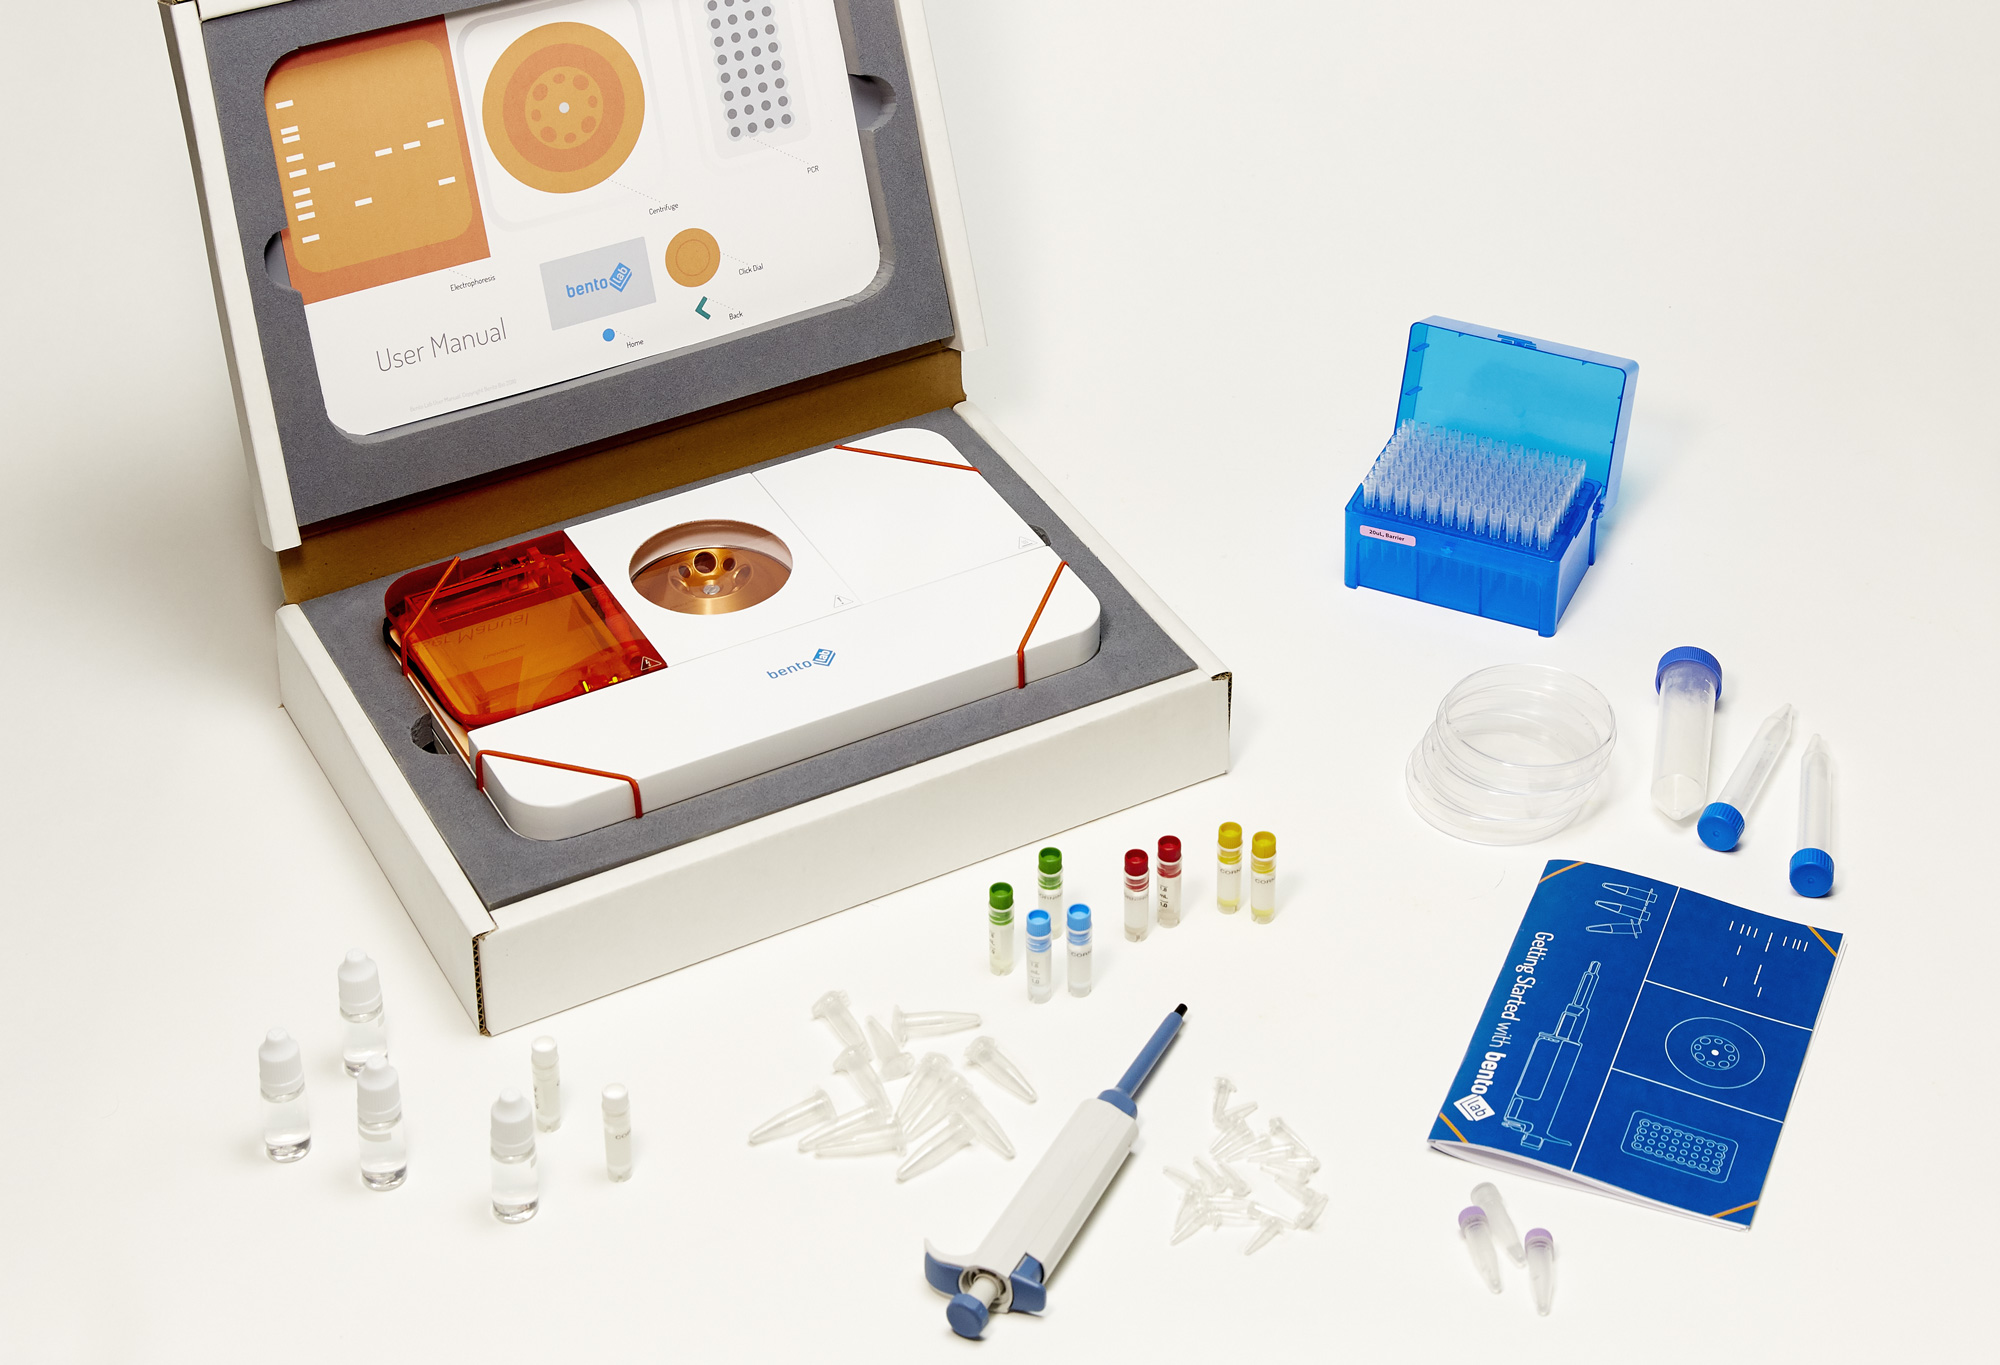 Image2: Bento Lab Kickstarter model with Tutorial Kit